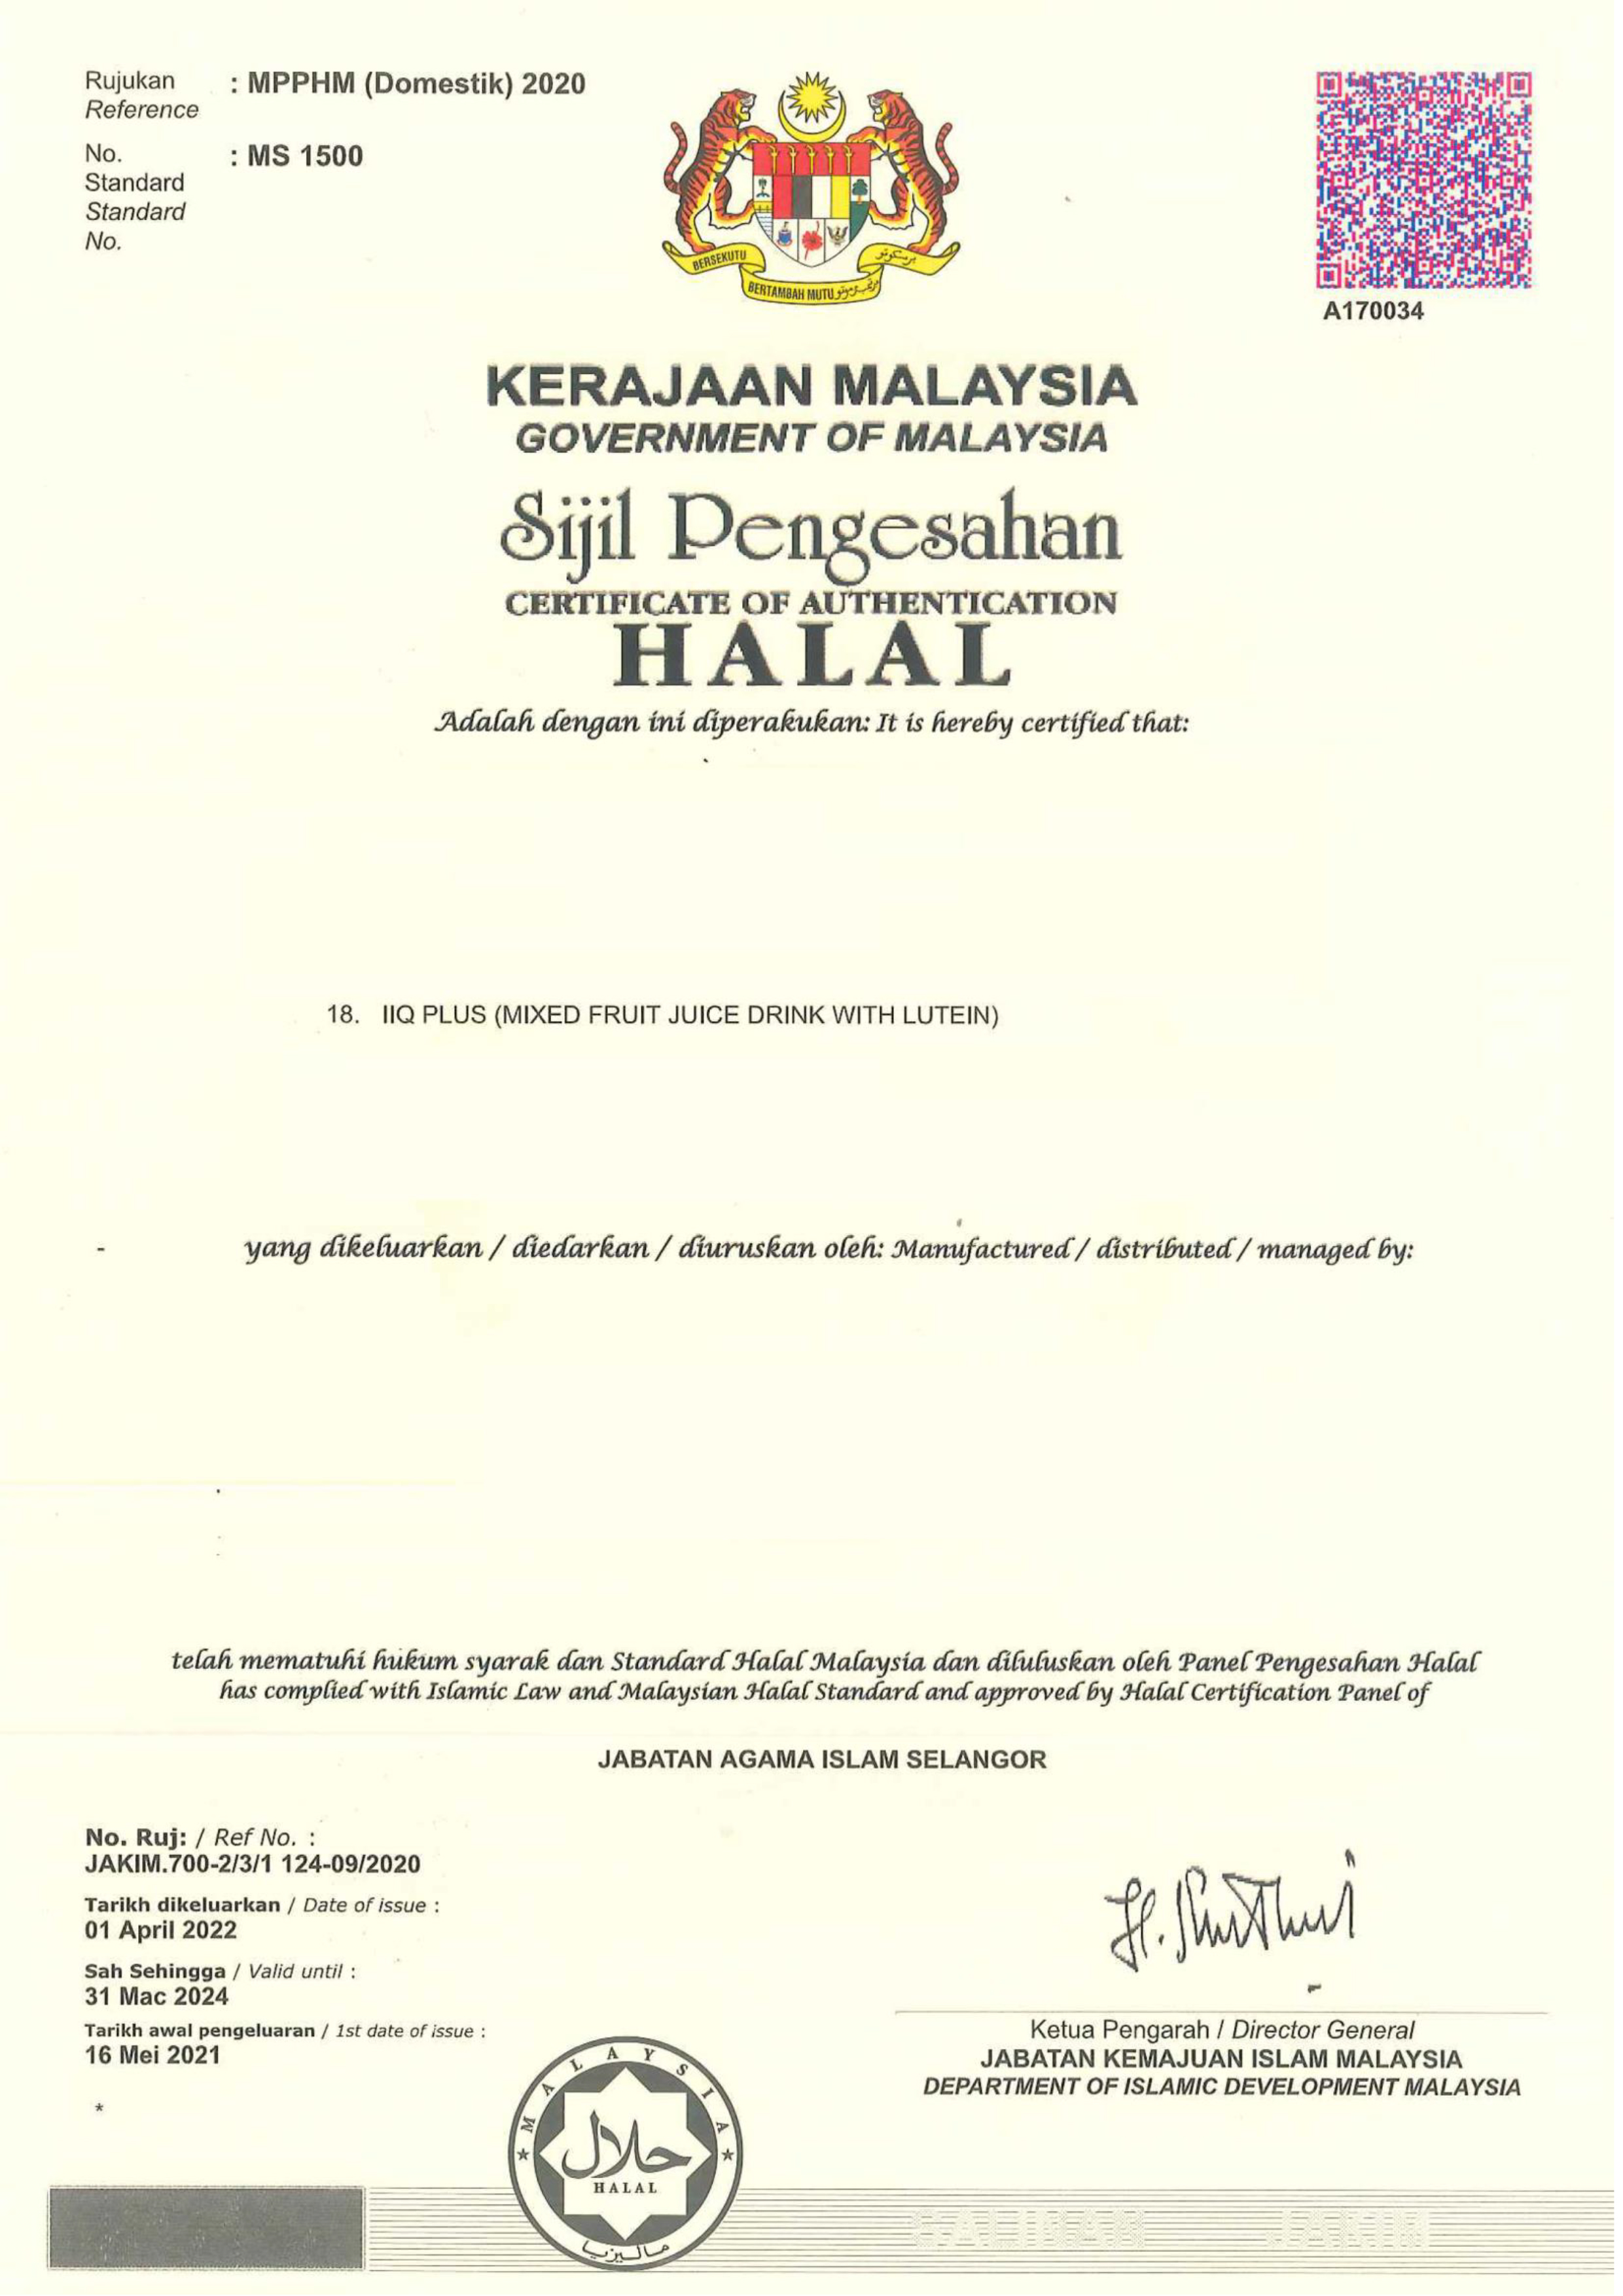 Double Stemcell™ - Halal Certificate